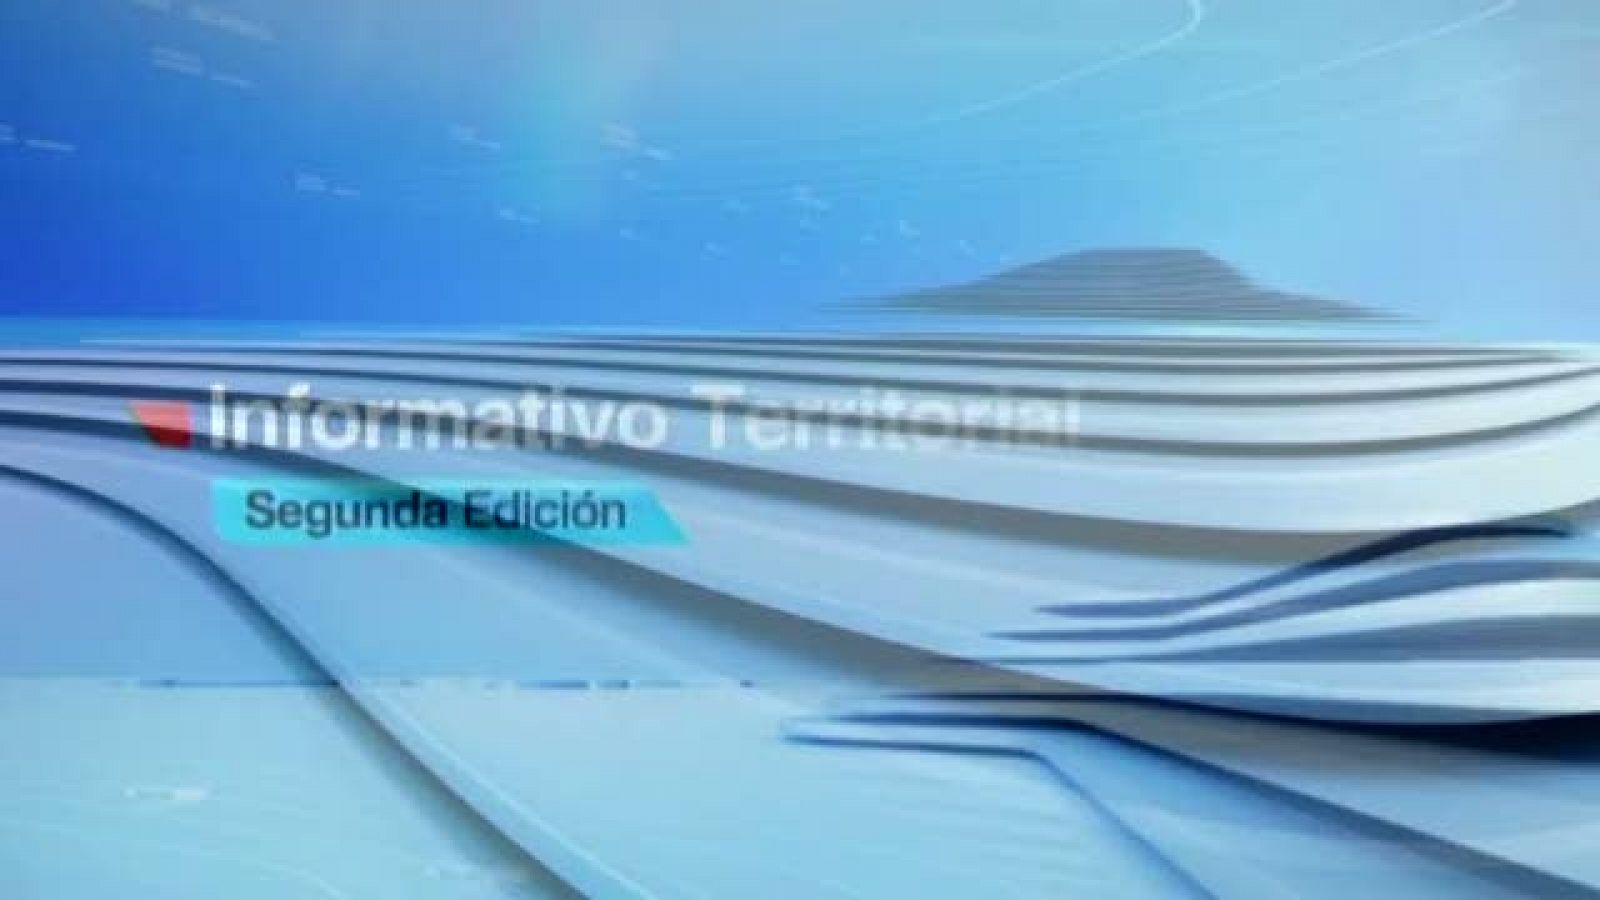 Noticias de Extremadura: Noticias de Extremadura 2 - 07/02/2019 | RTVE Play